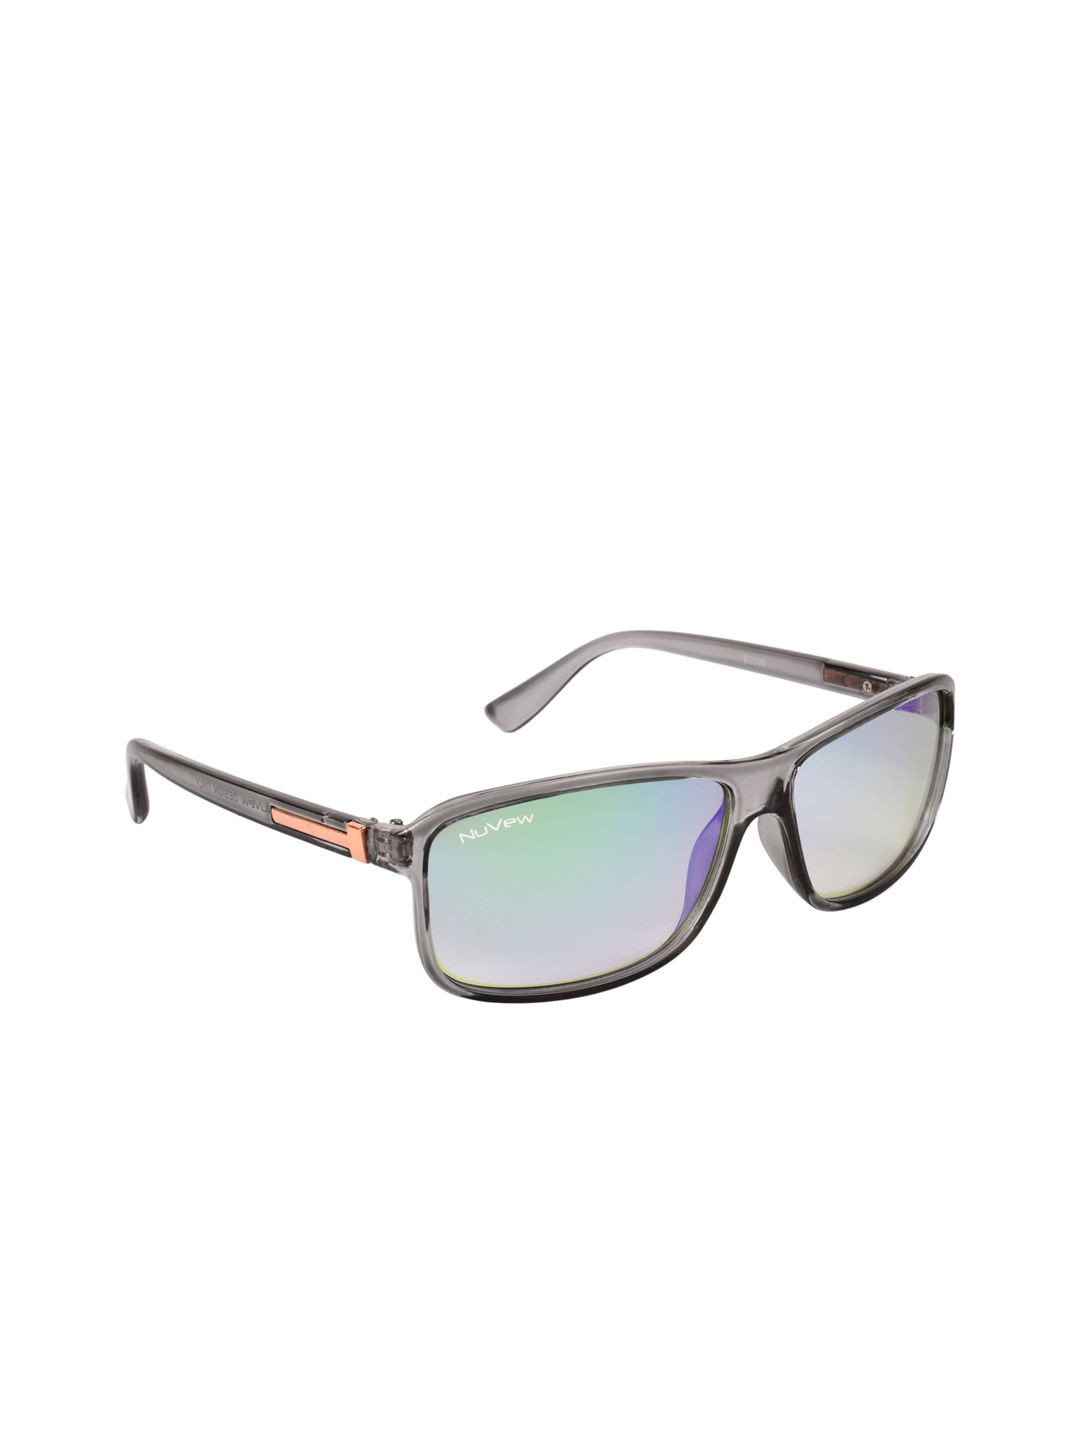 NuVew Unisex Green Wayfarer Rectangular Sunglasses Price in India